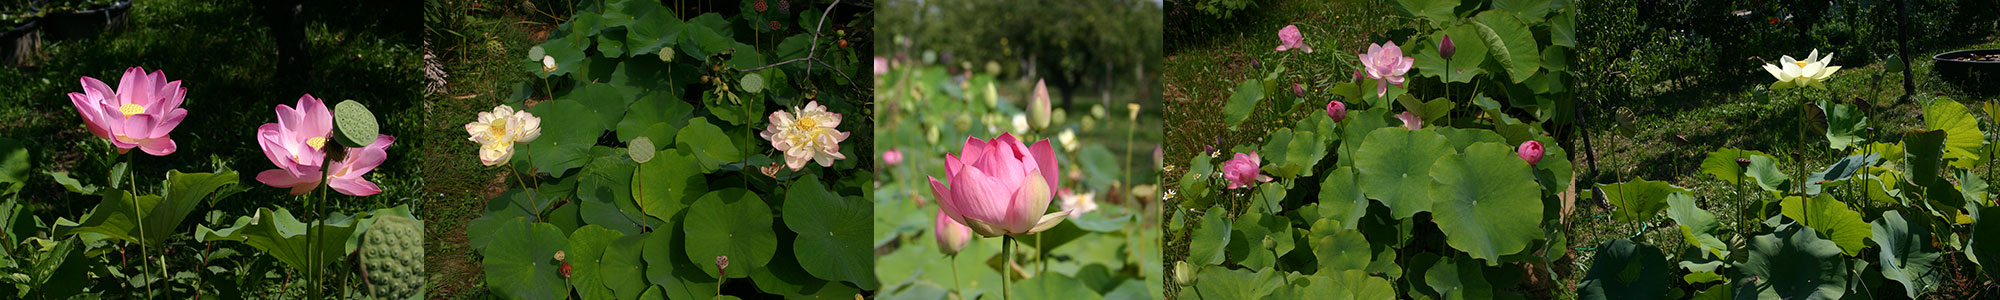 Lotus flower, nelumbo